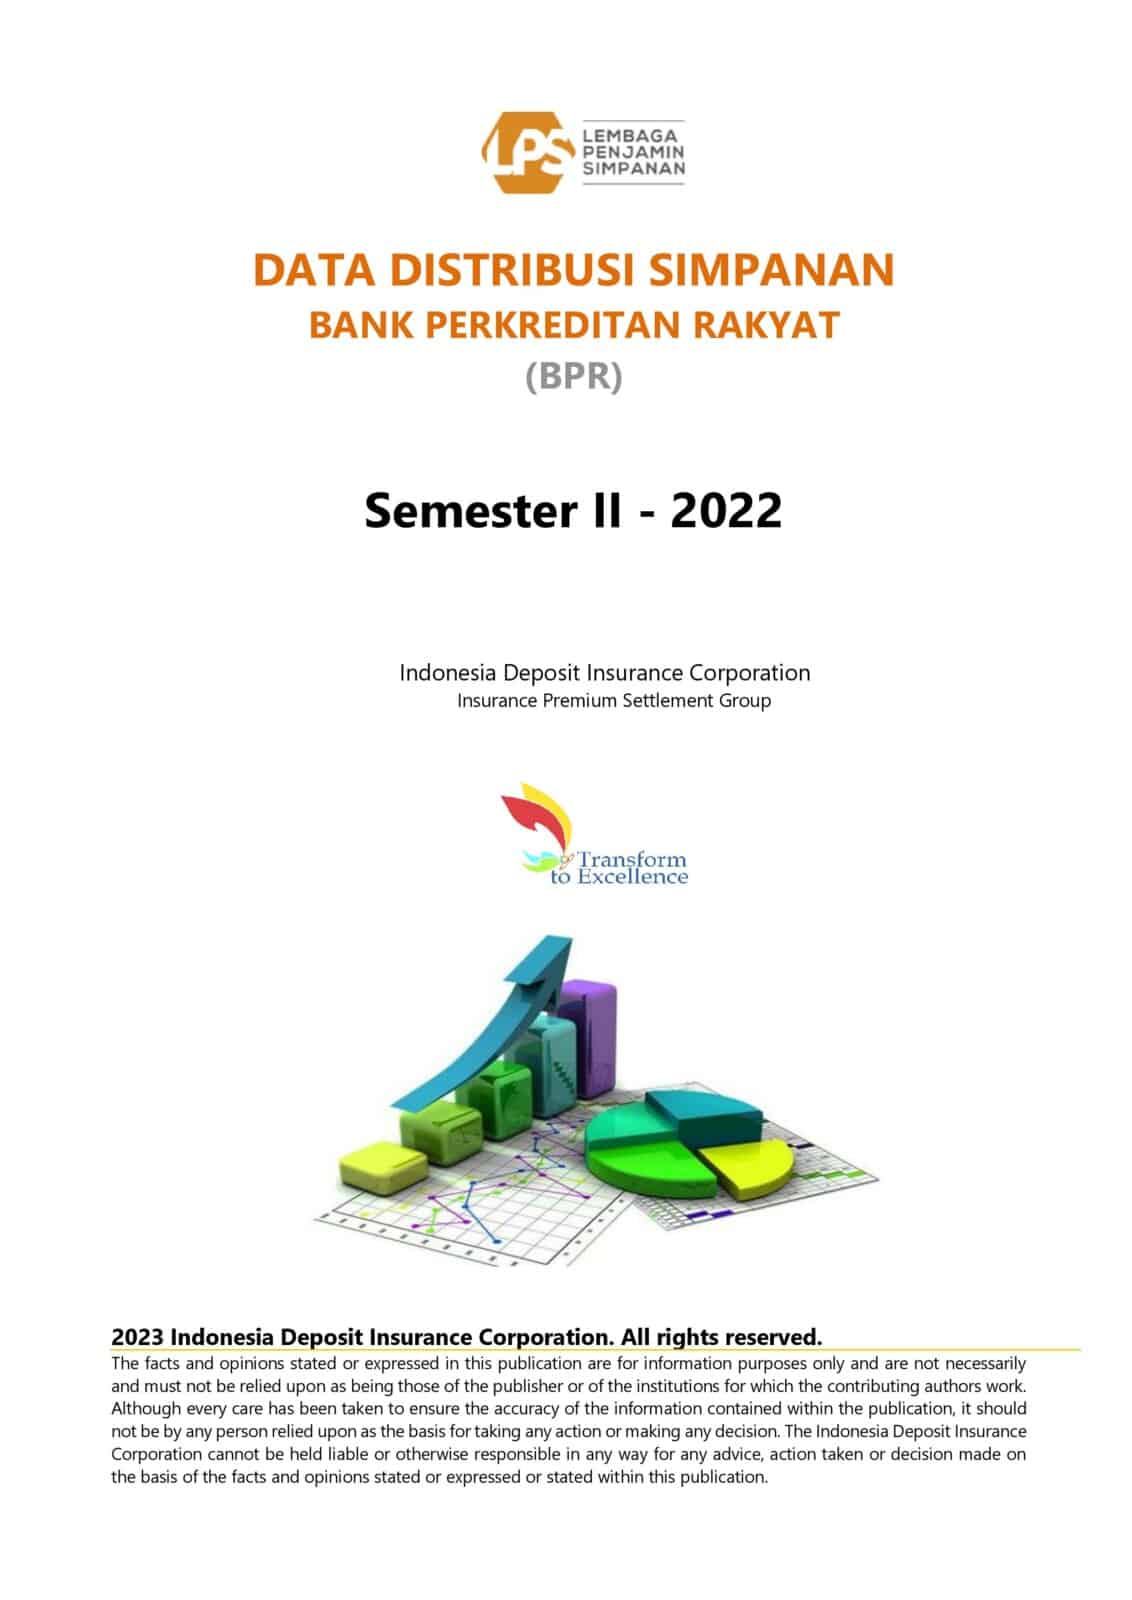 Data Distribusi Simpanan BPR/BPRS Semester II 2022